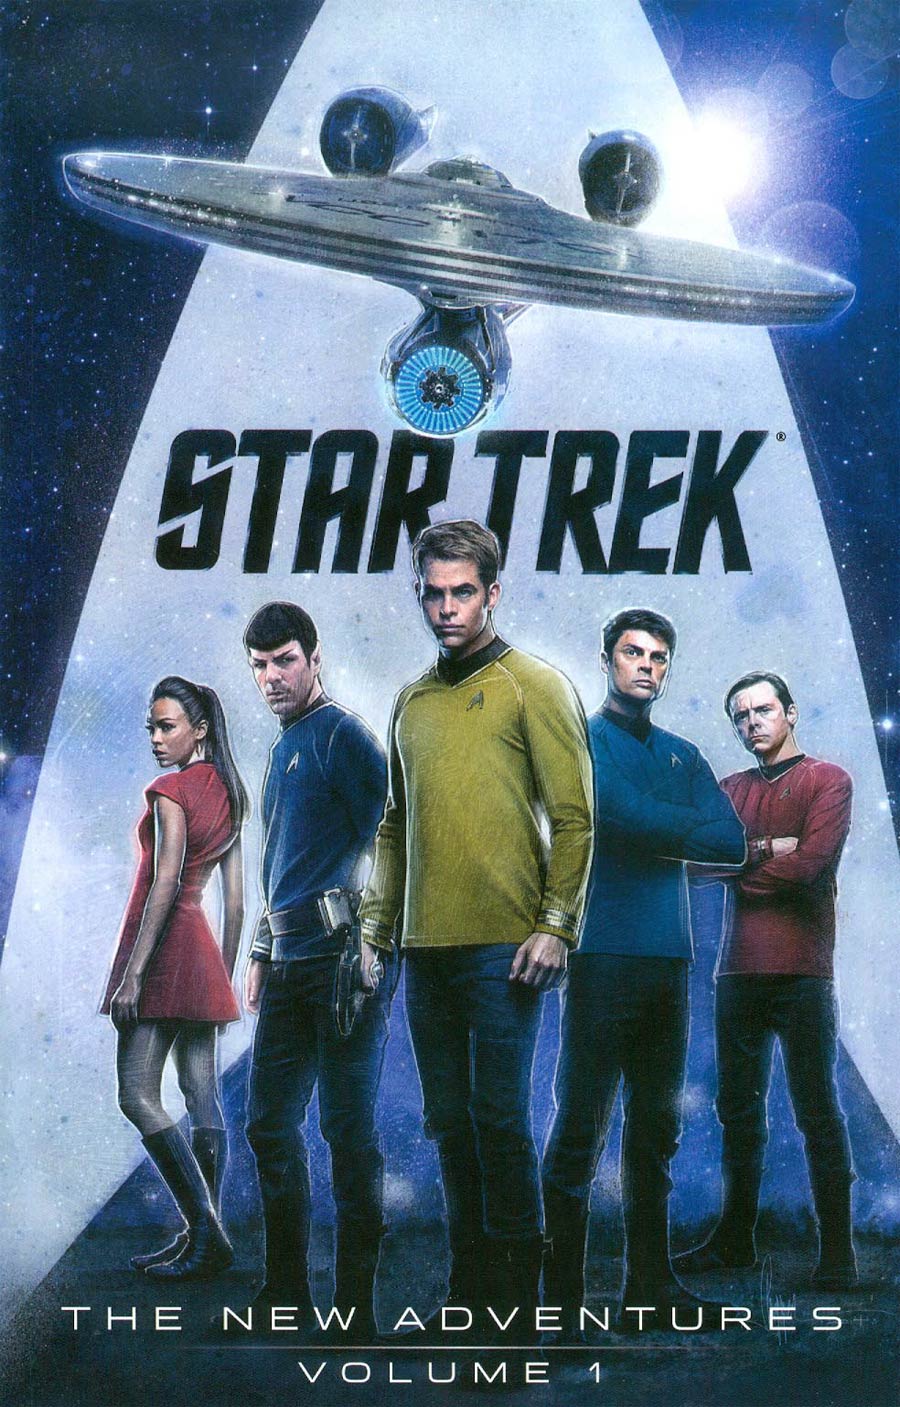 Star Trek New Adventures Vol 1 TP